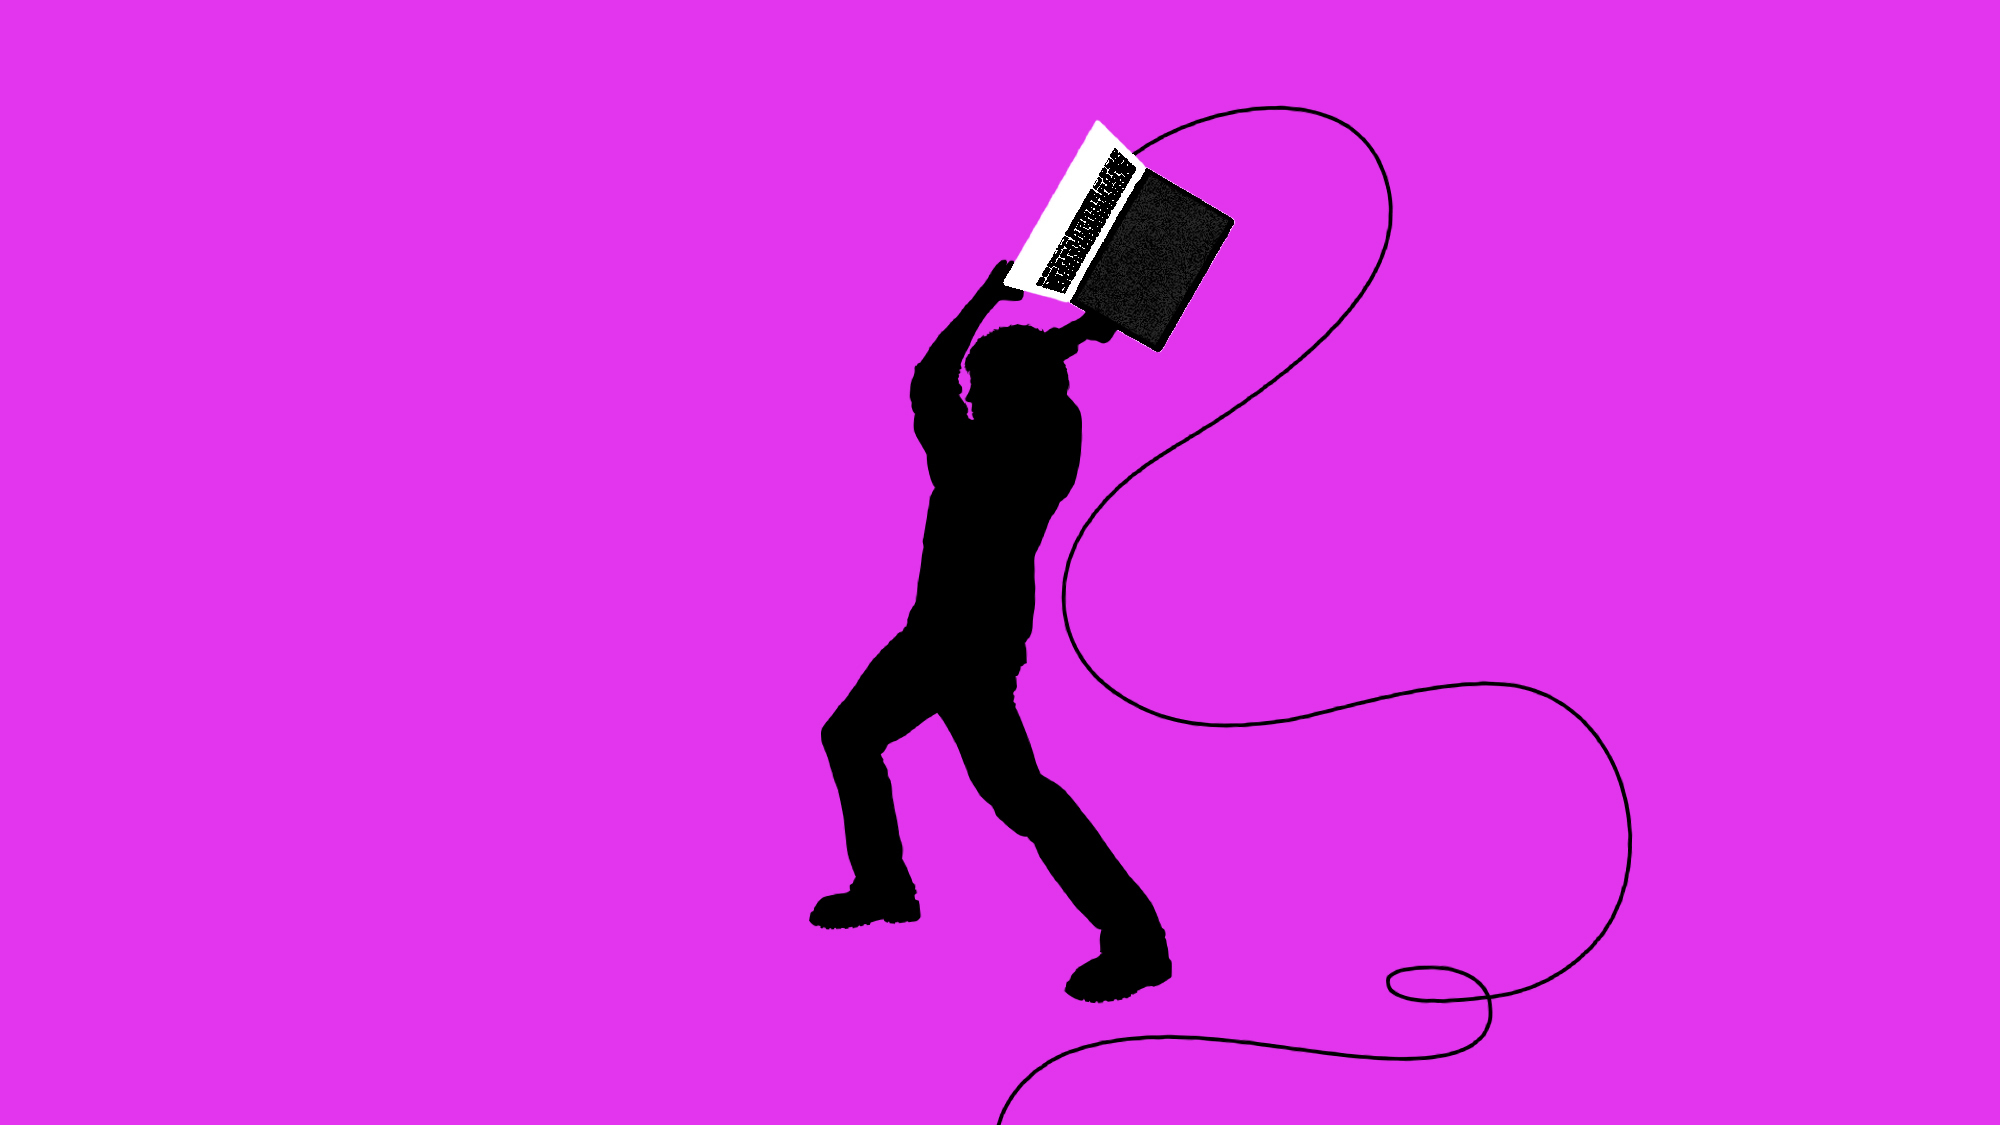 Illustration of a man smashing a laptop, styled like a classic iPod advertisement